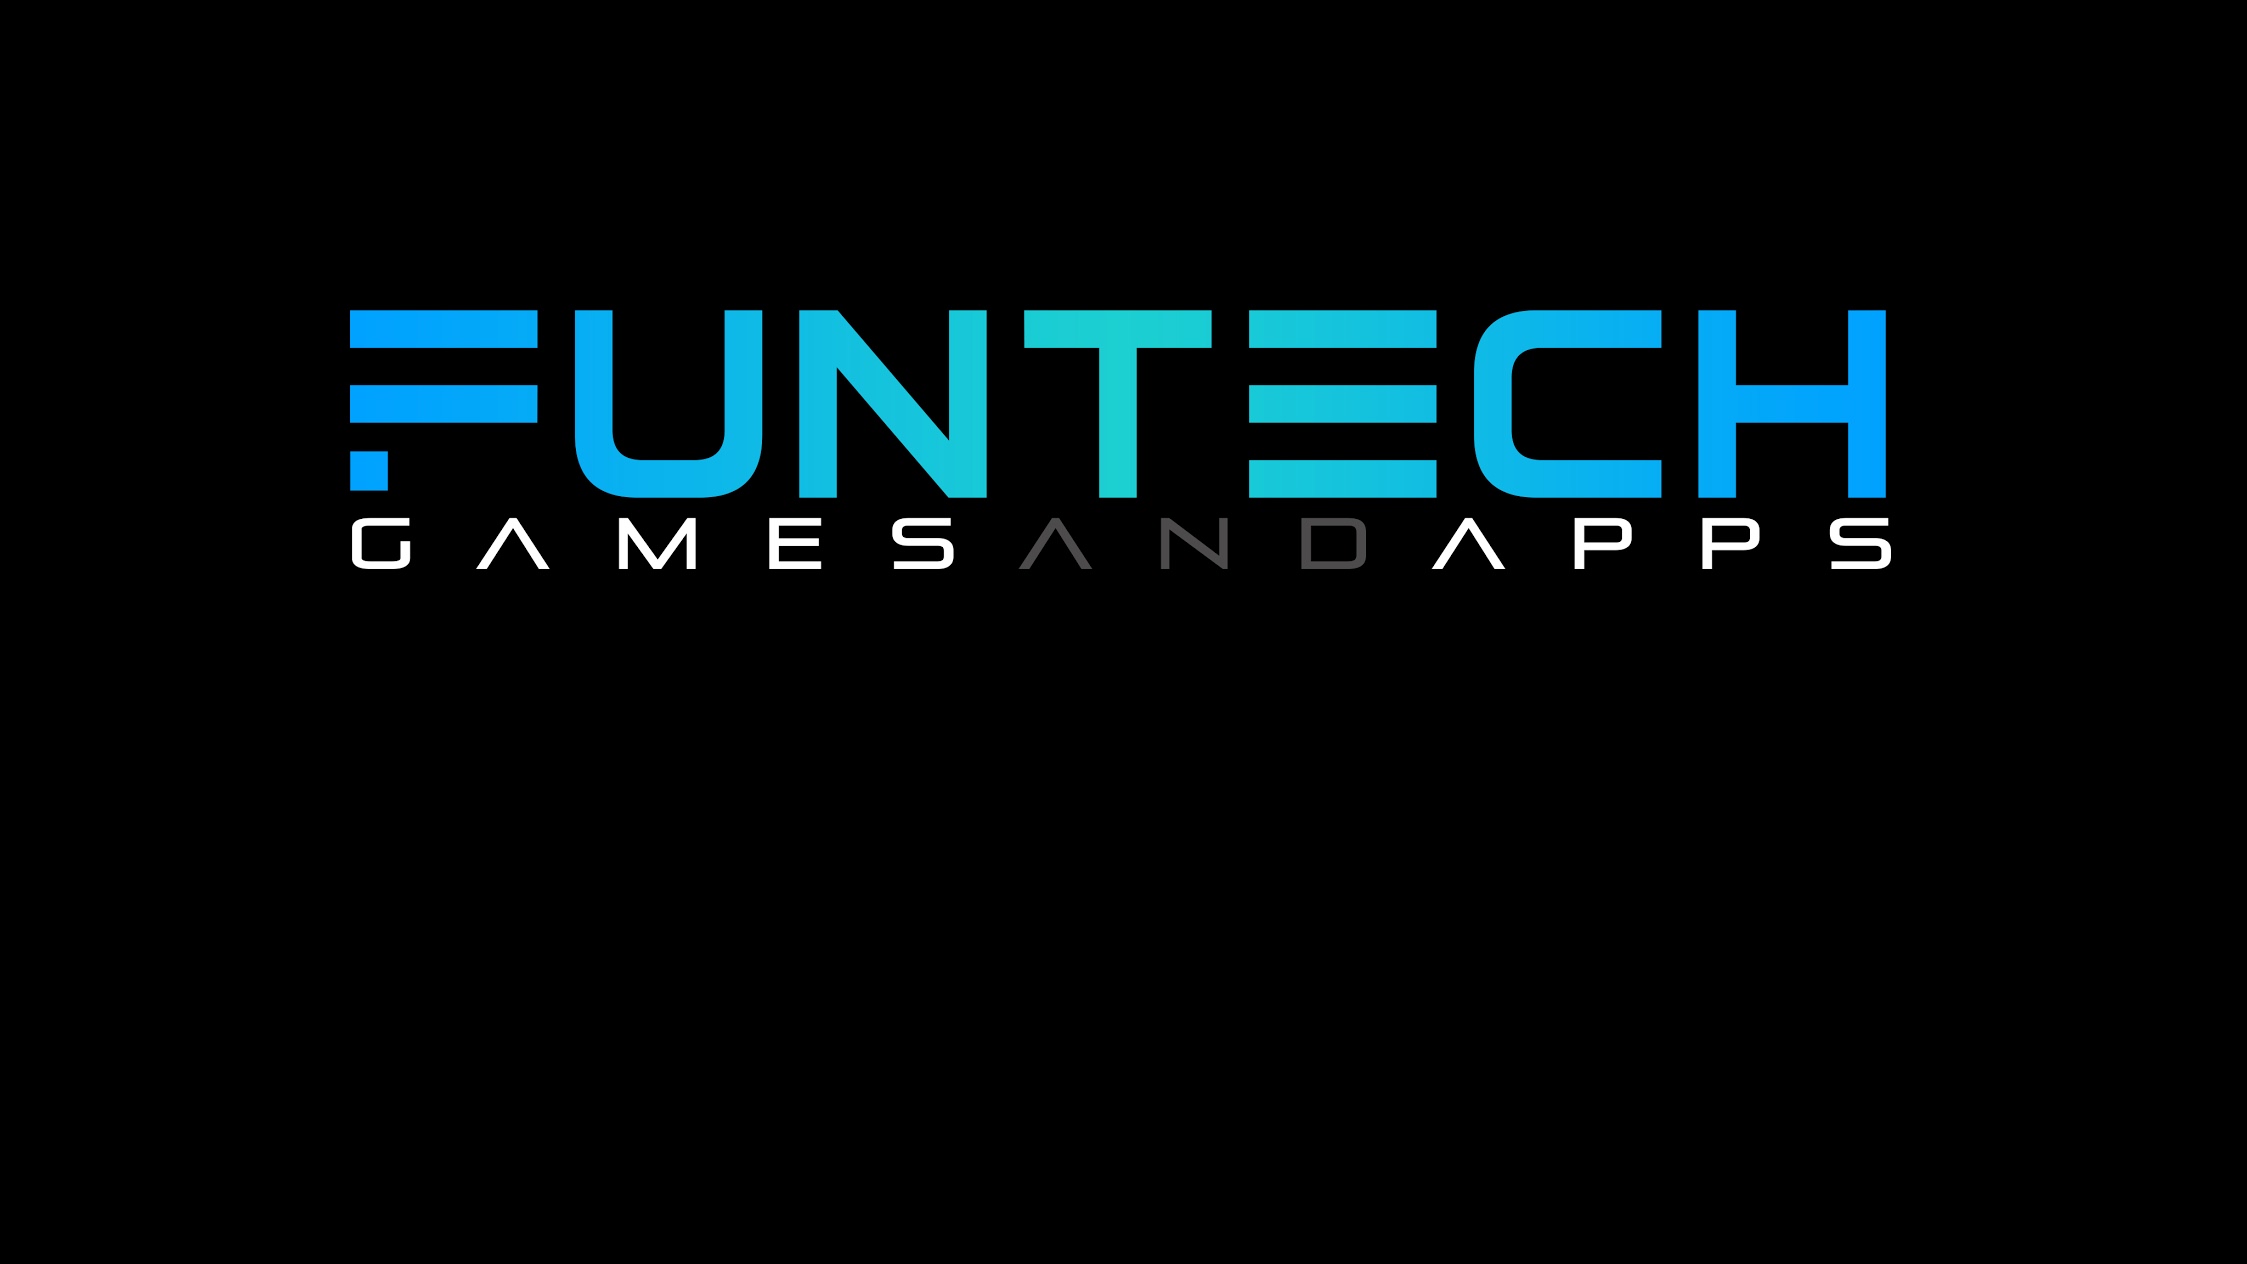 Funtech Games